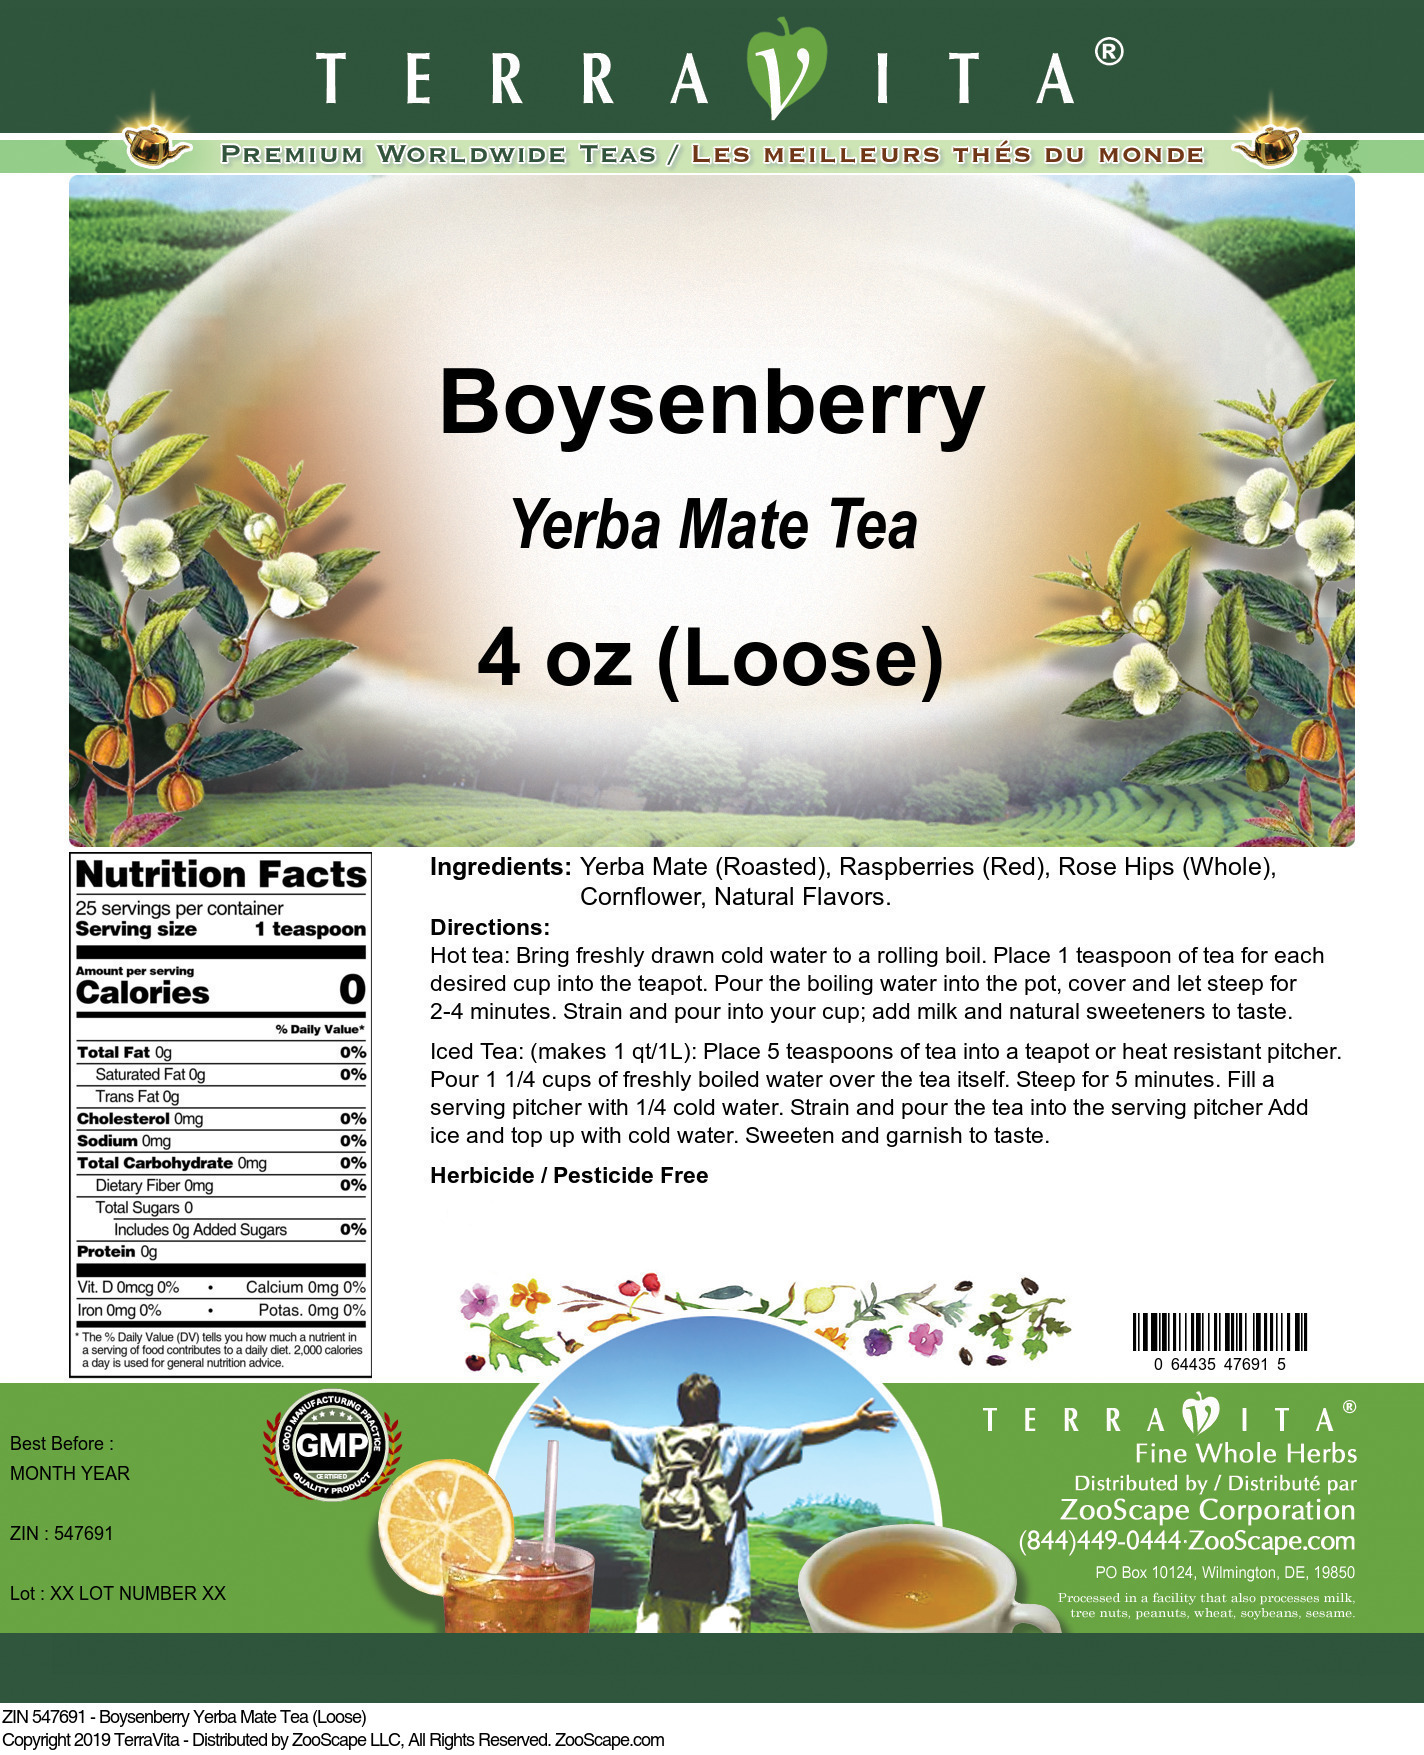 Boysenberry Yerba Mate Tea (Loose) - Label